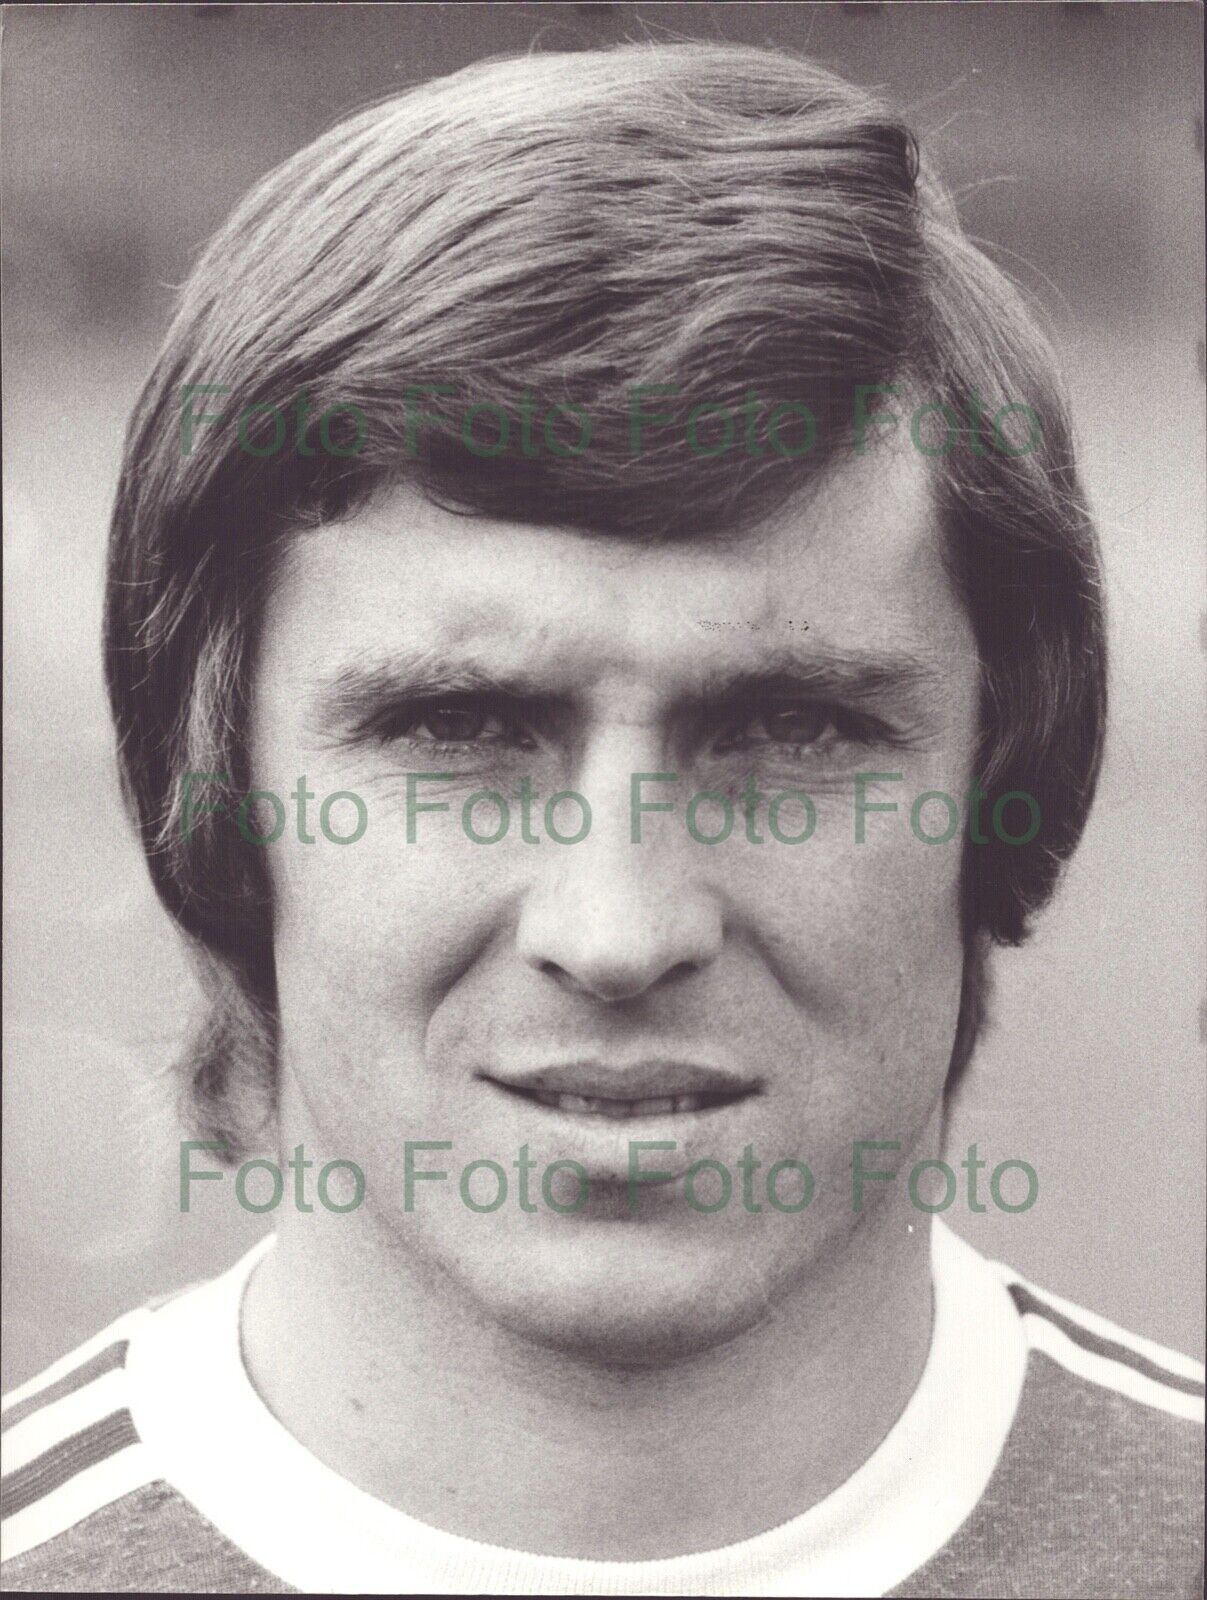 Klaus Fischer - FC Schalke 04 - 1976 - Vintage Football Press Photo Poster painting (TV-2928 +